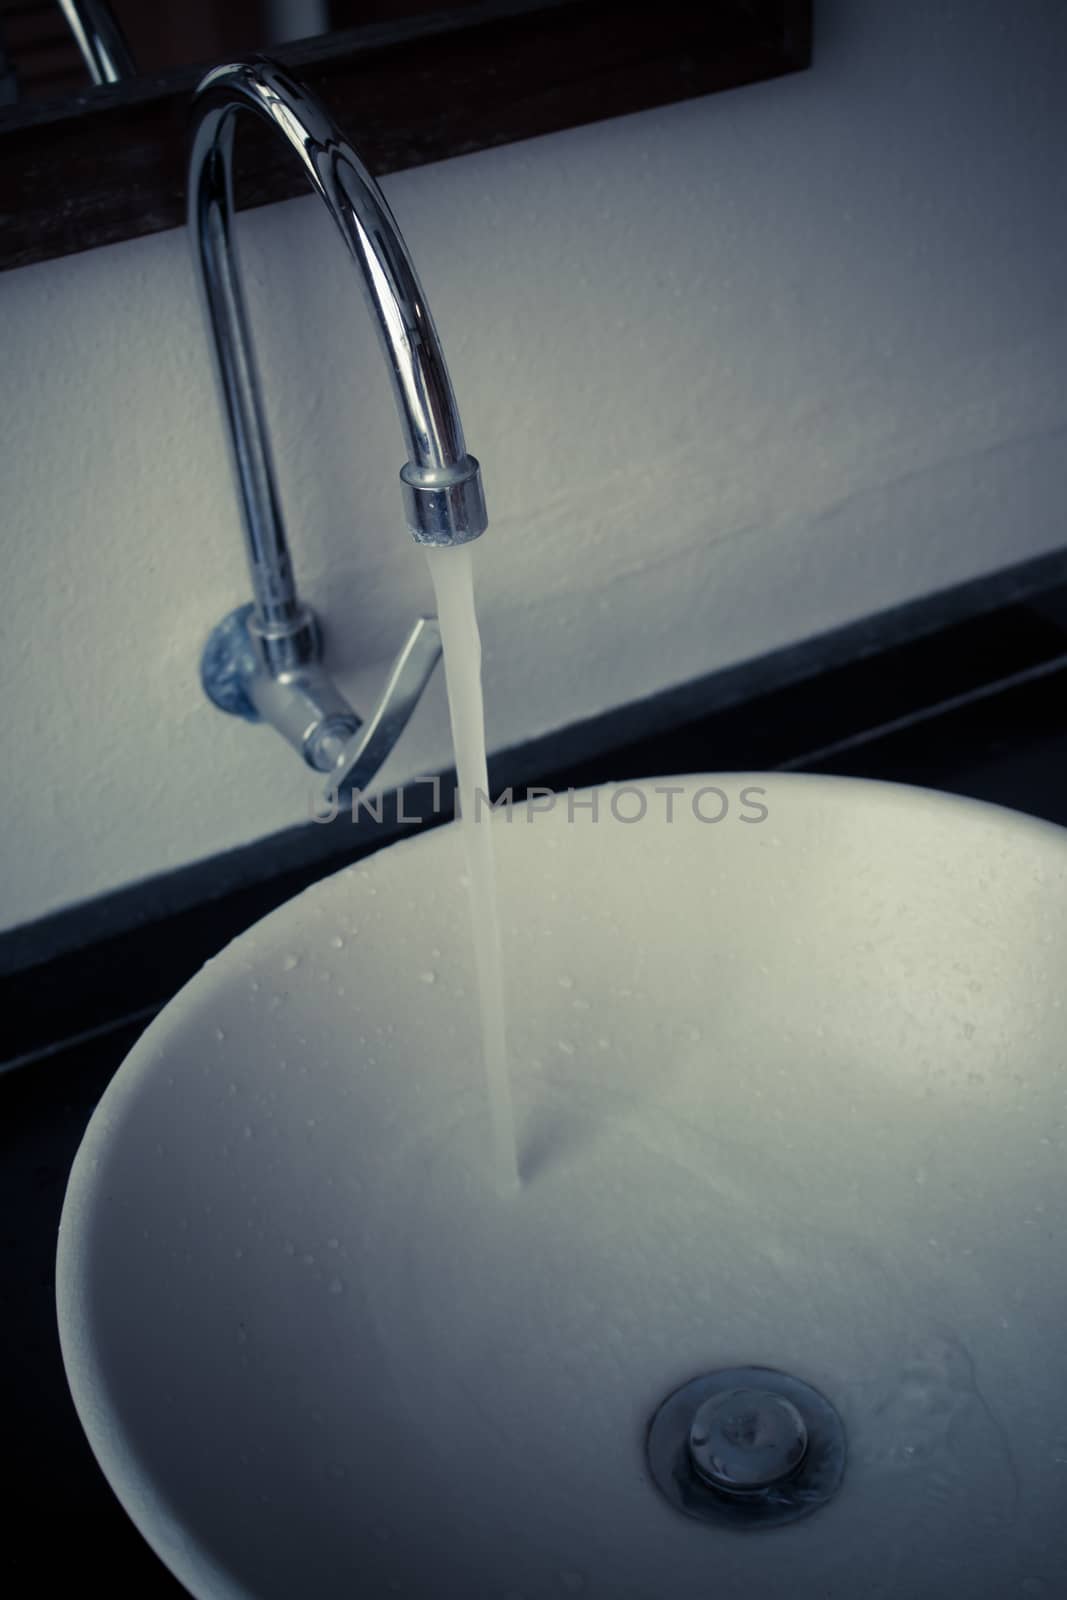 Water tap over white ceramic washbasin by worrayuth